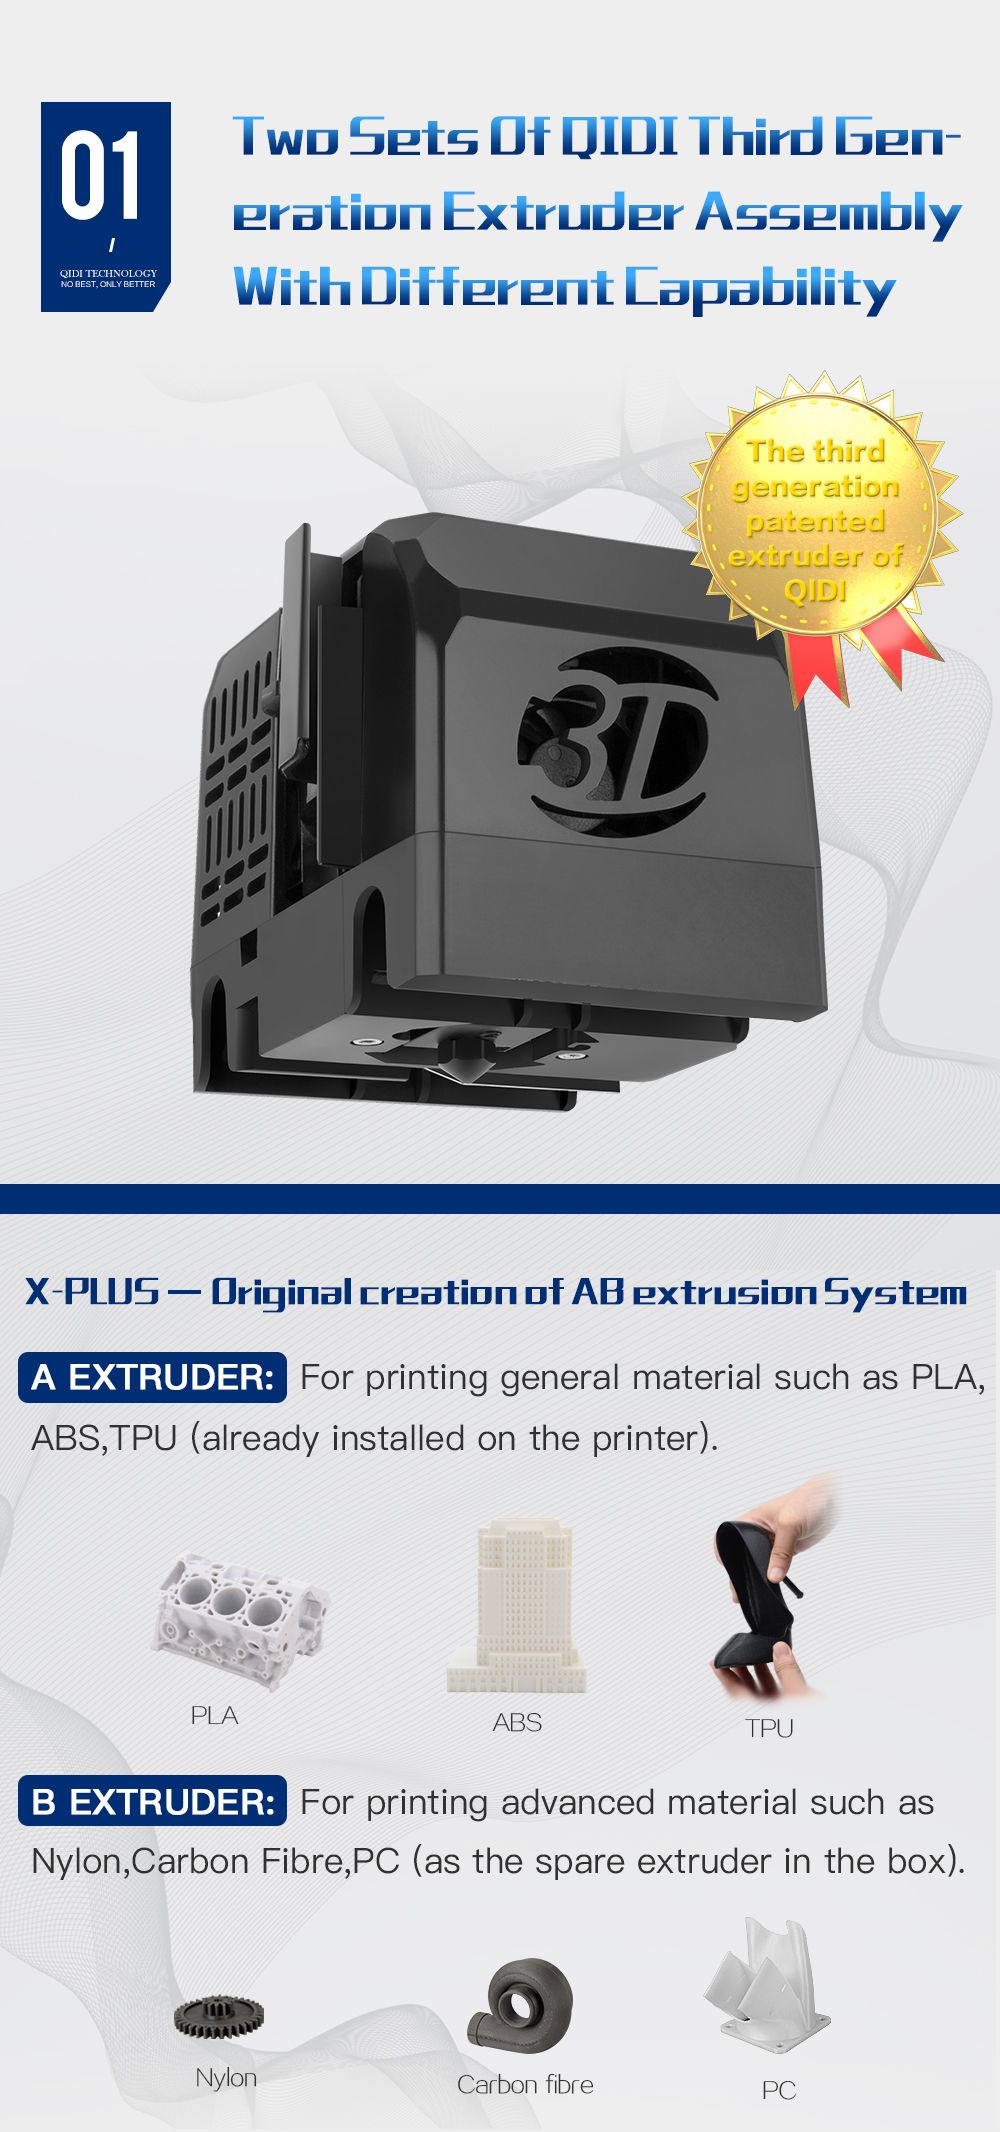 R QIDI TECHNOLOGY X-Plus 3D Printer WiFi Connection Nylon Carbon Fiber PC Printing 270x200x200mm Print Size